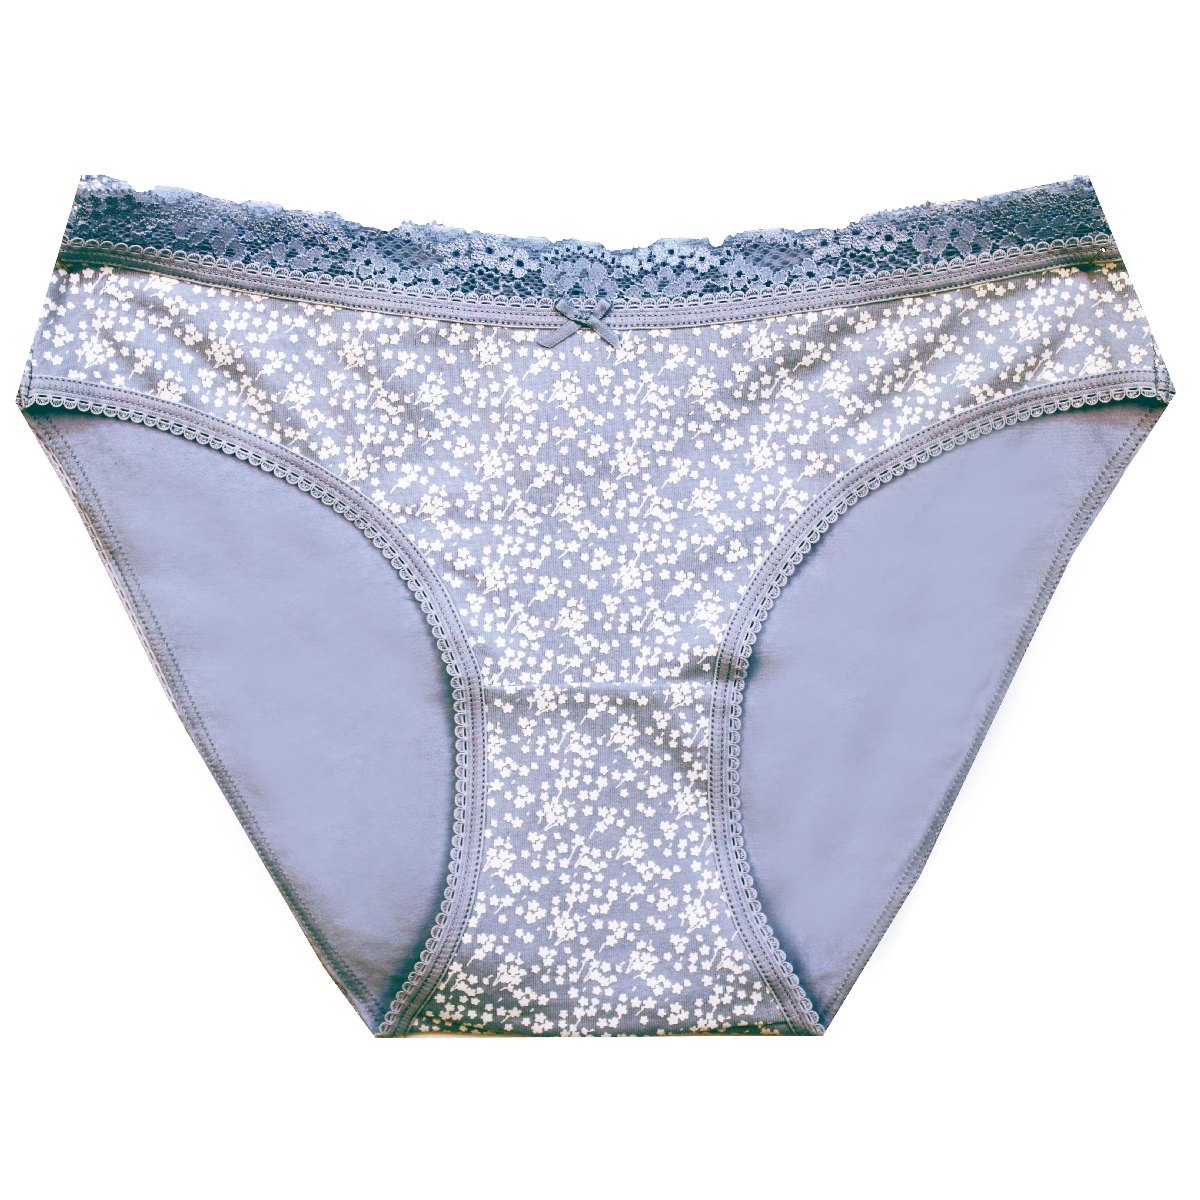 Ladies Underwear Mothercare - Get Best Price from Manufacturers